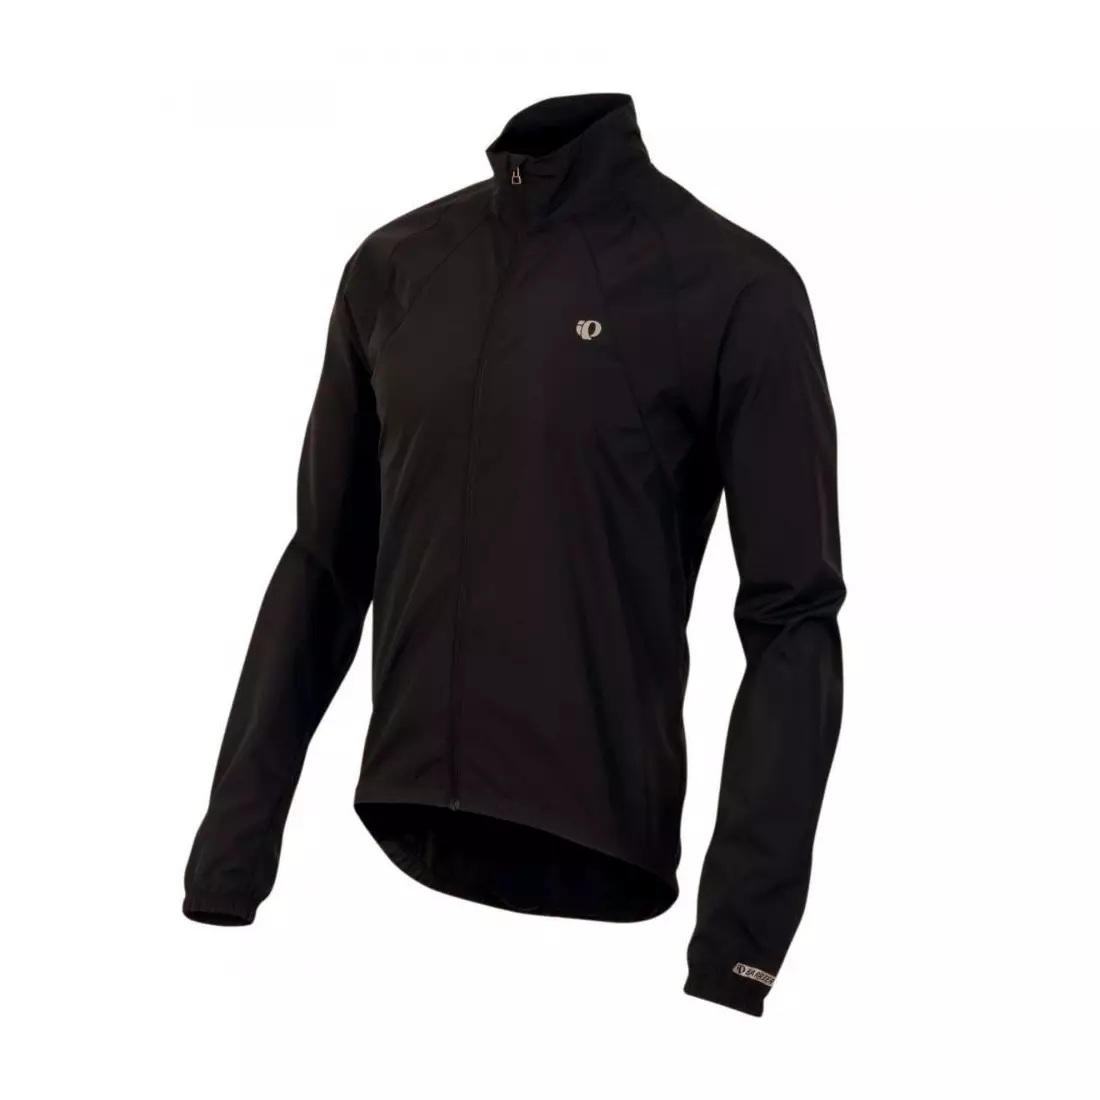 PEARL IZUMI - SELECT Barrier Jacket 11131335-021 - men's cycling jacket - color: Black